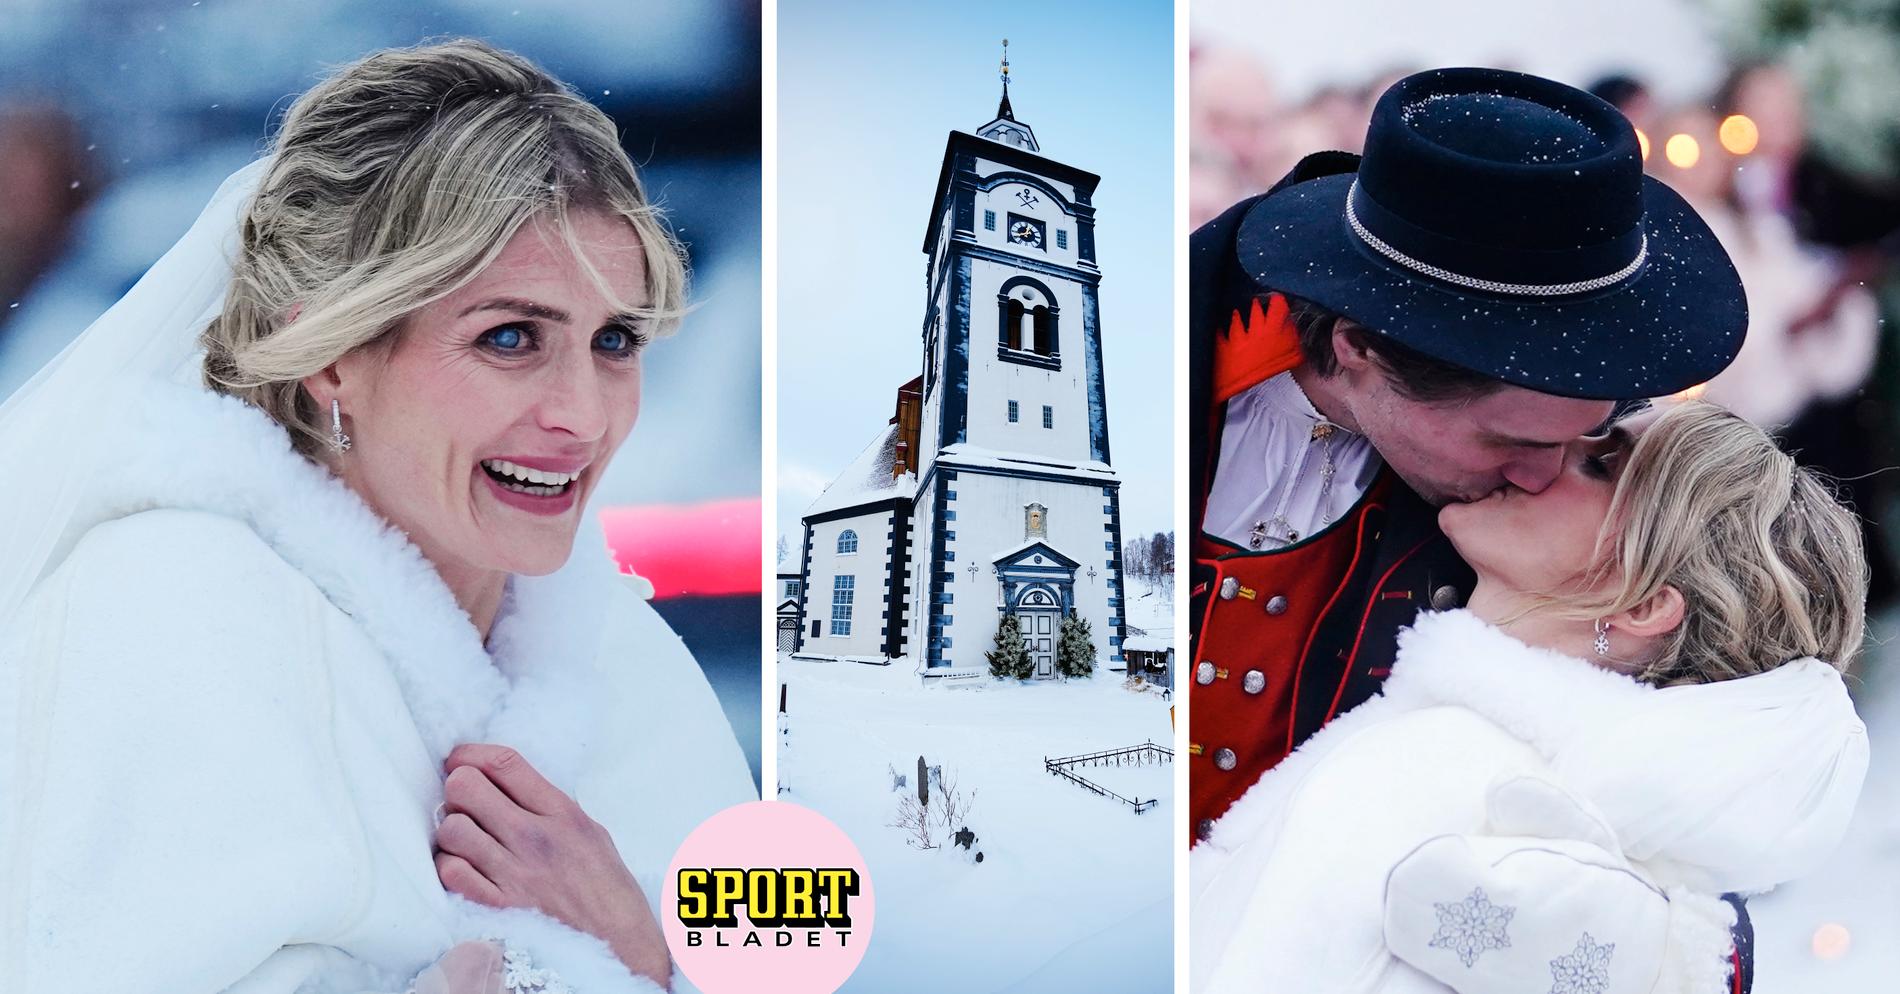 Therese Johaug Wedding Photos: Ski Queen Marries Nils Jakob Hoff in Stunning Ceremony